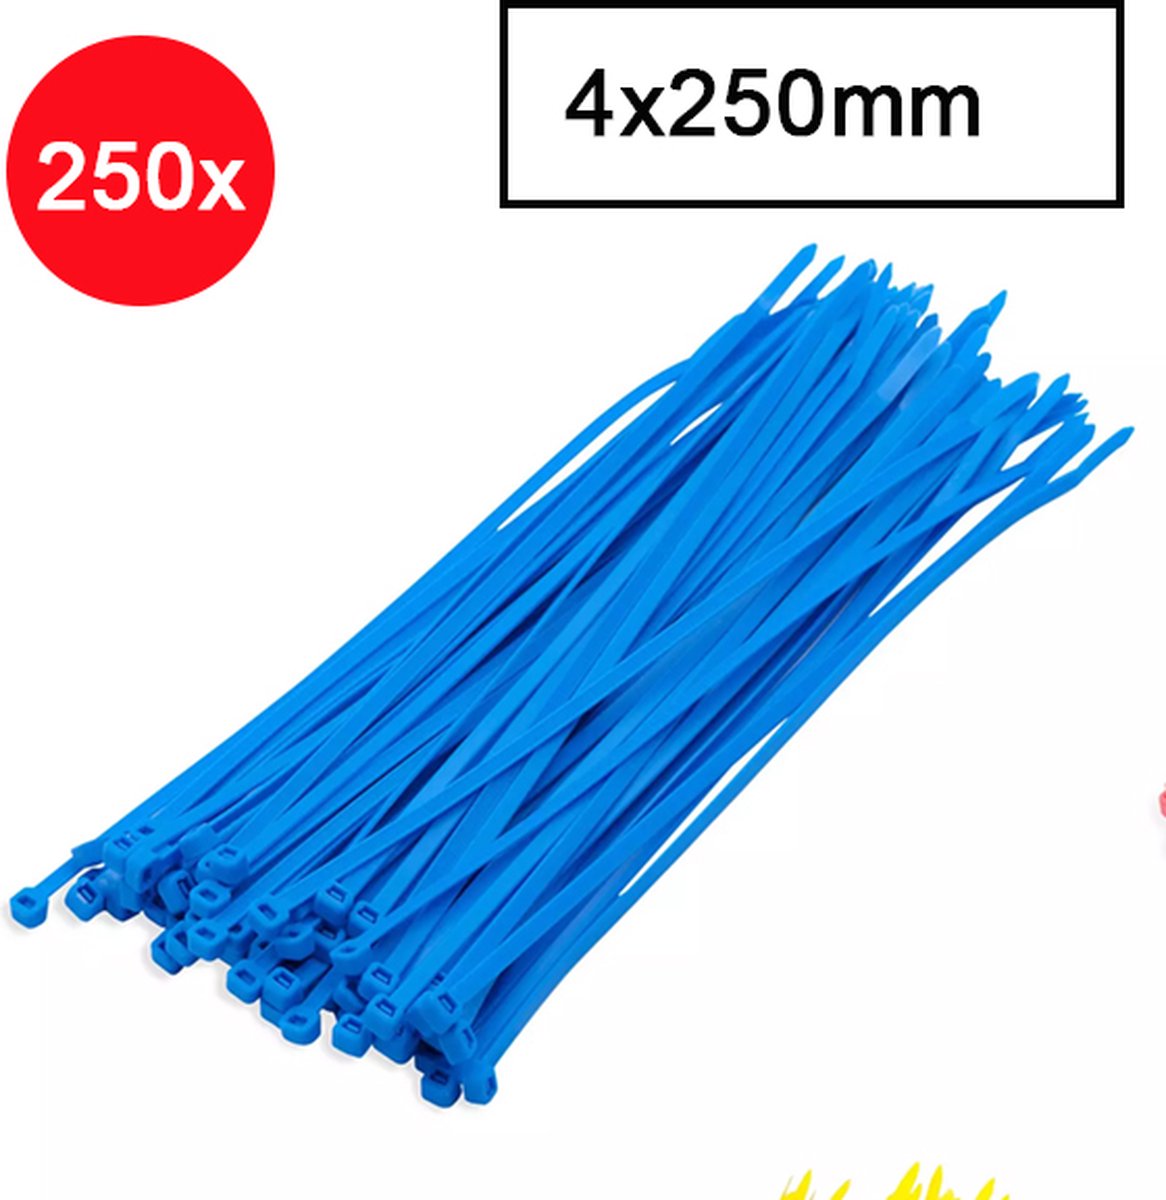 Kabelbinders - Tyraps - Tie wraps - Kabel organizer - 4x250mm - 250 stuks - Blauw